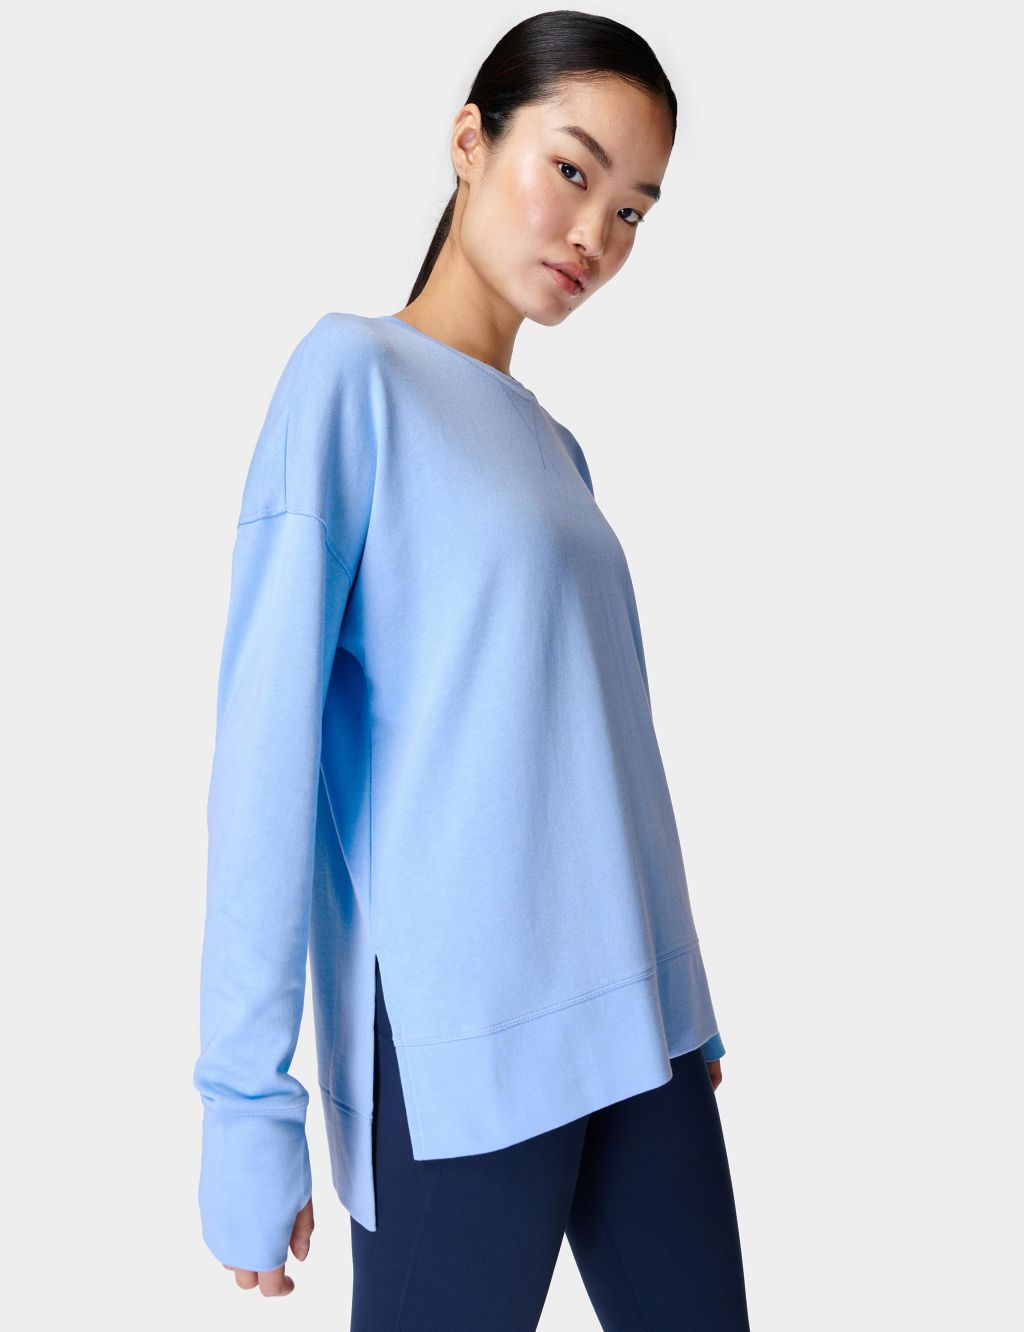 After Class Cotton Blend Longline Sweatshirt image 1